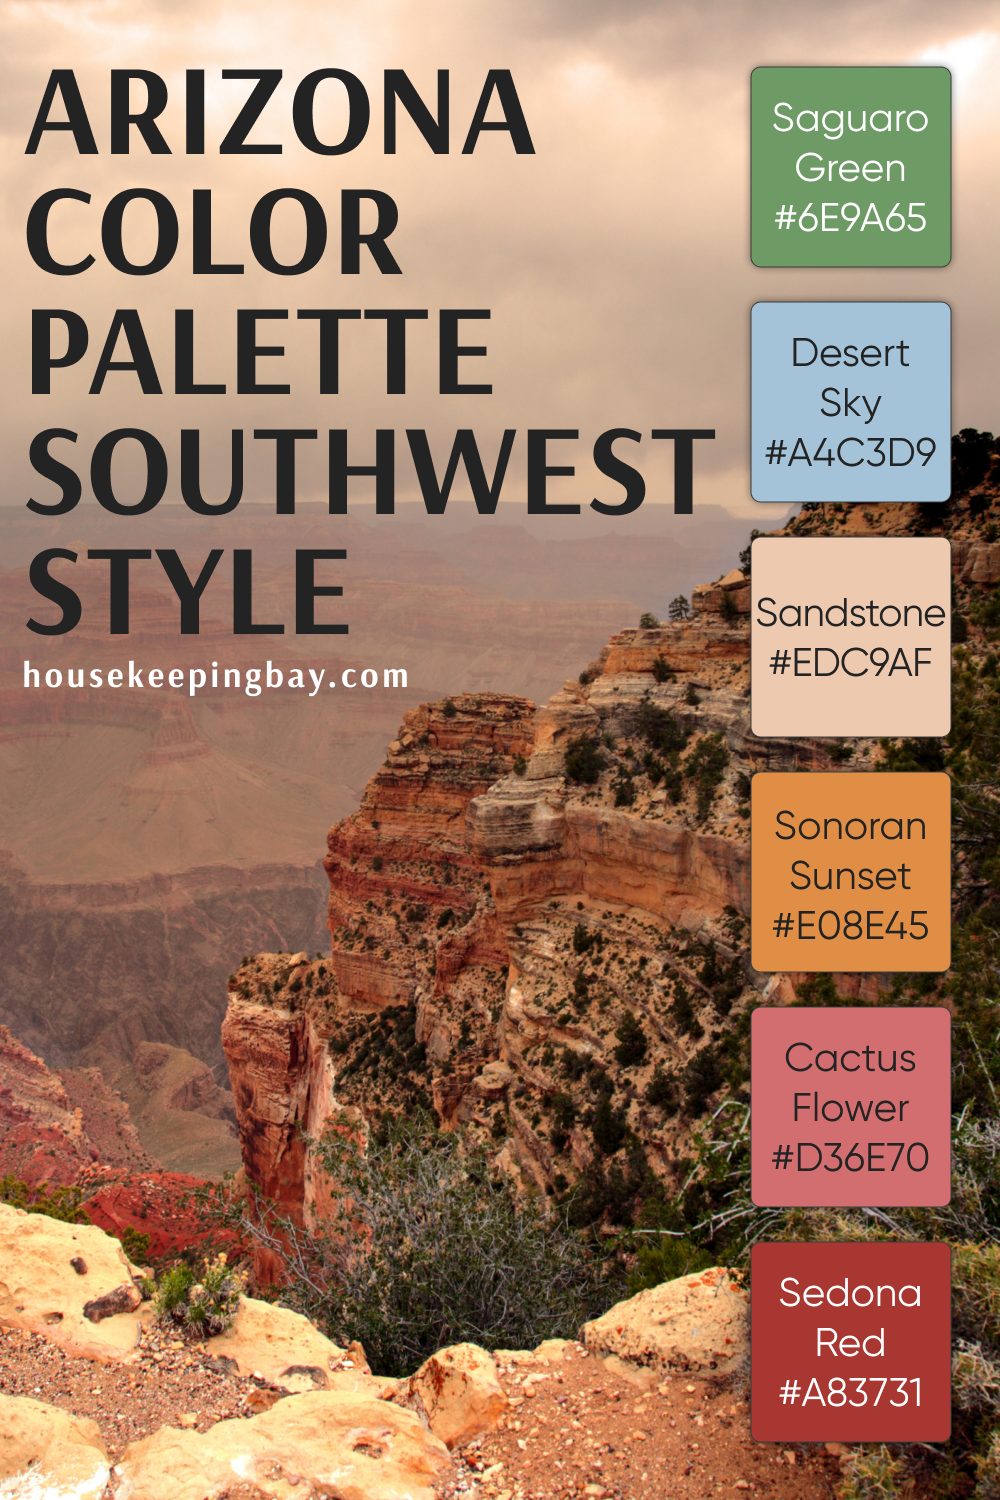 Arizona Color Palette Southwest Style